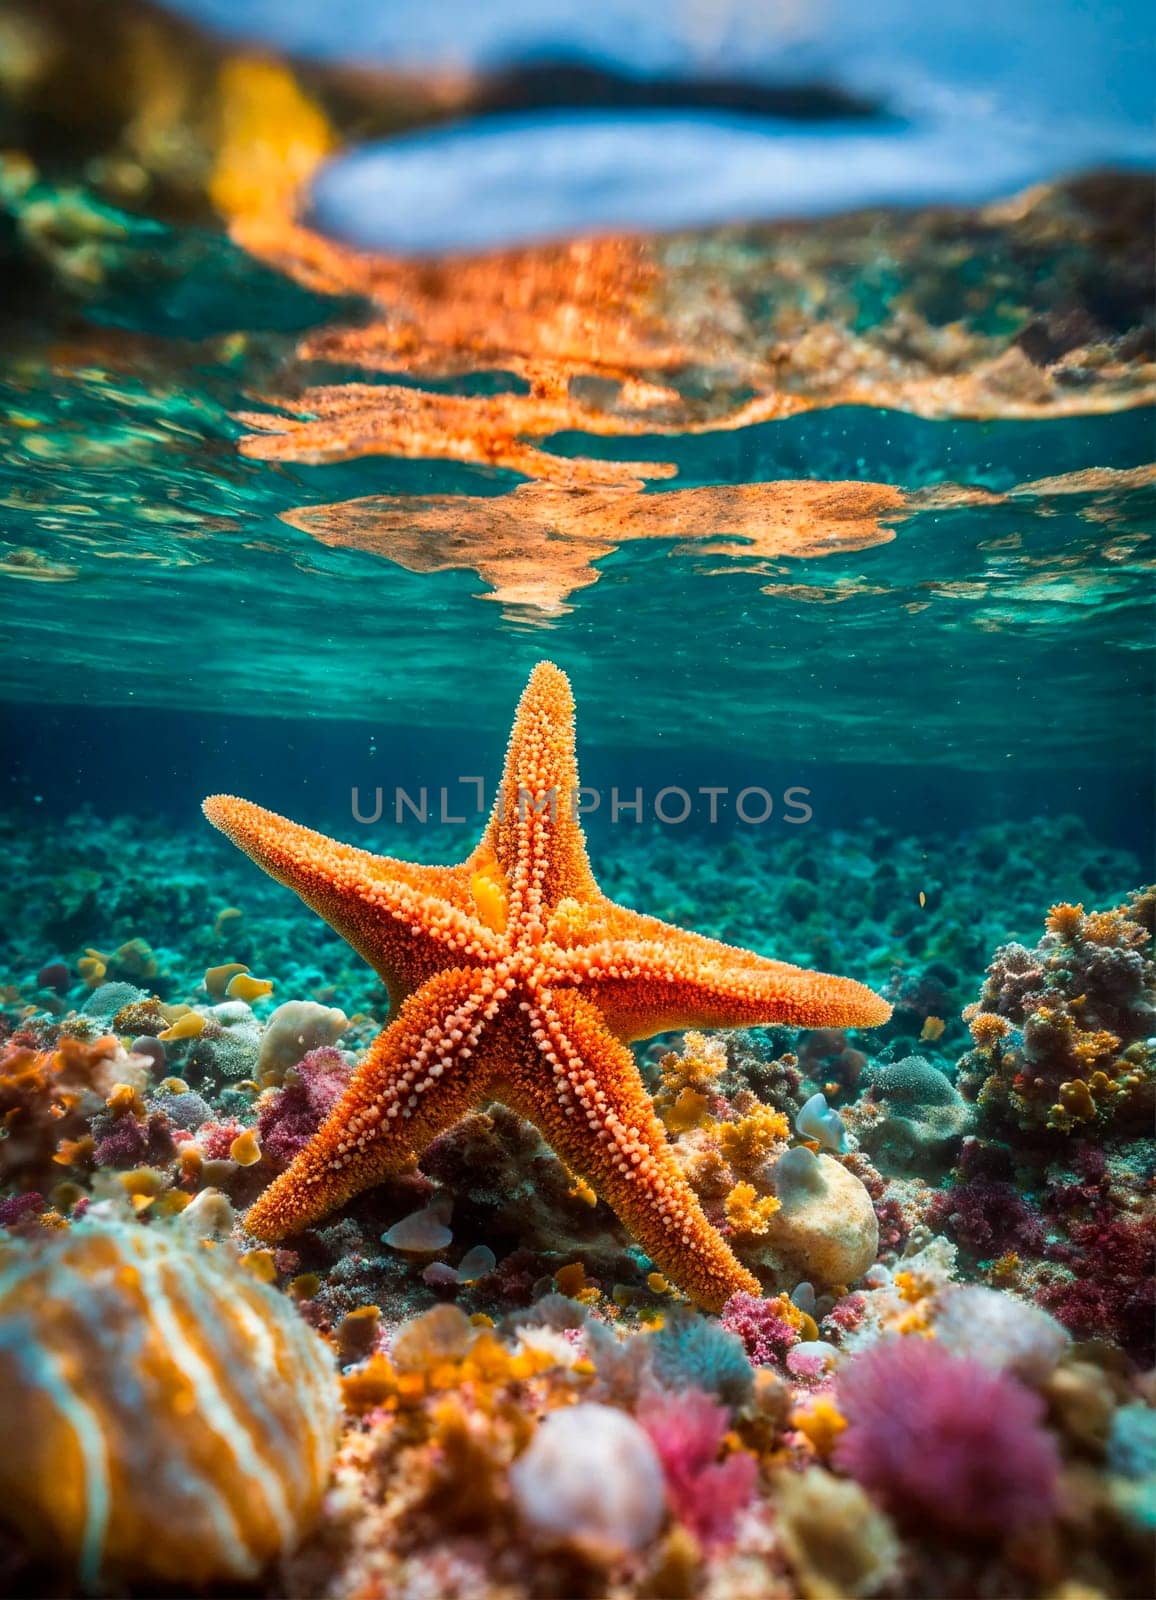 shells and starfish on the seashore. Selective focus. by yanadjana